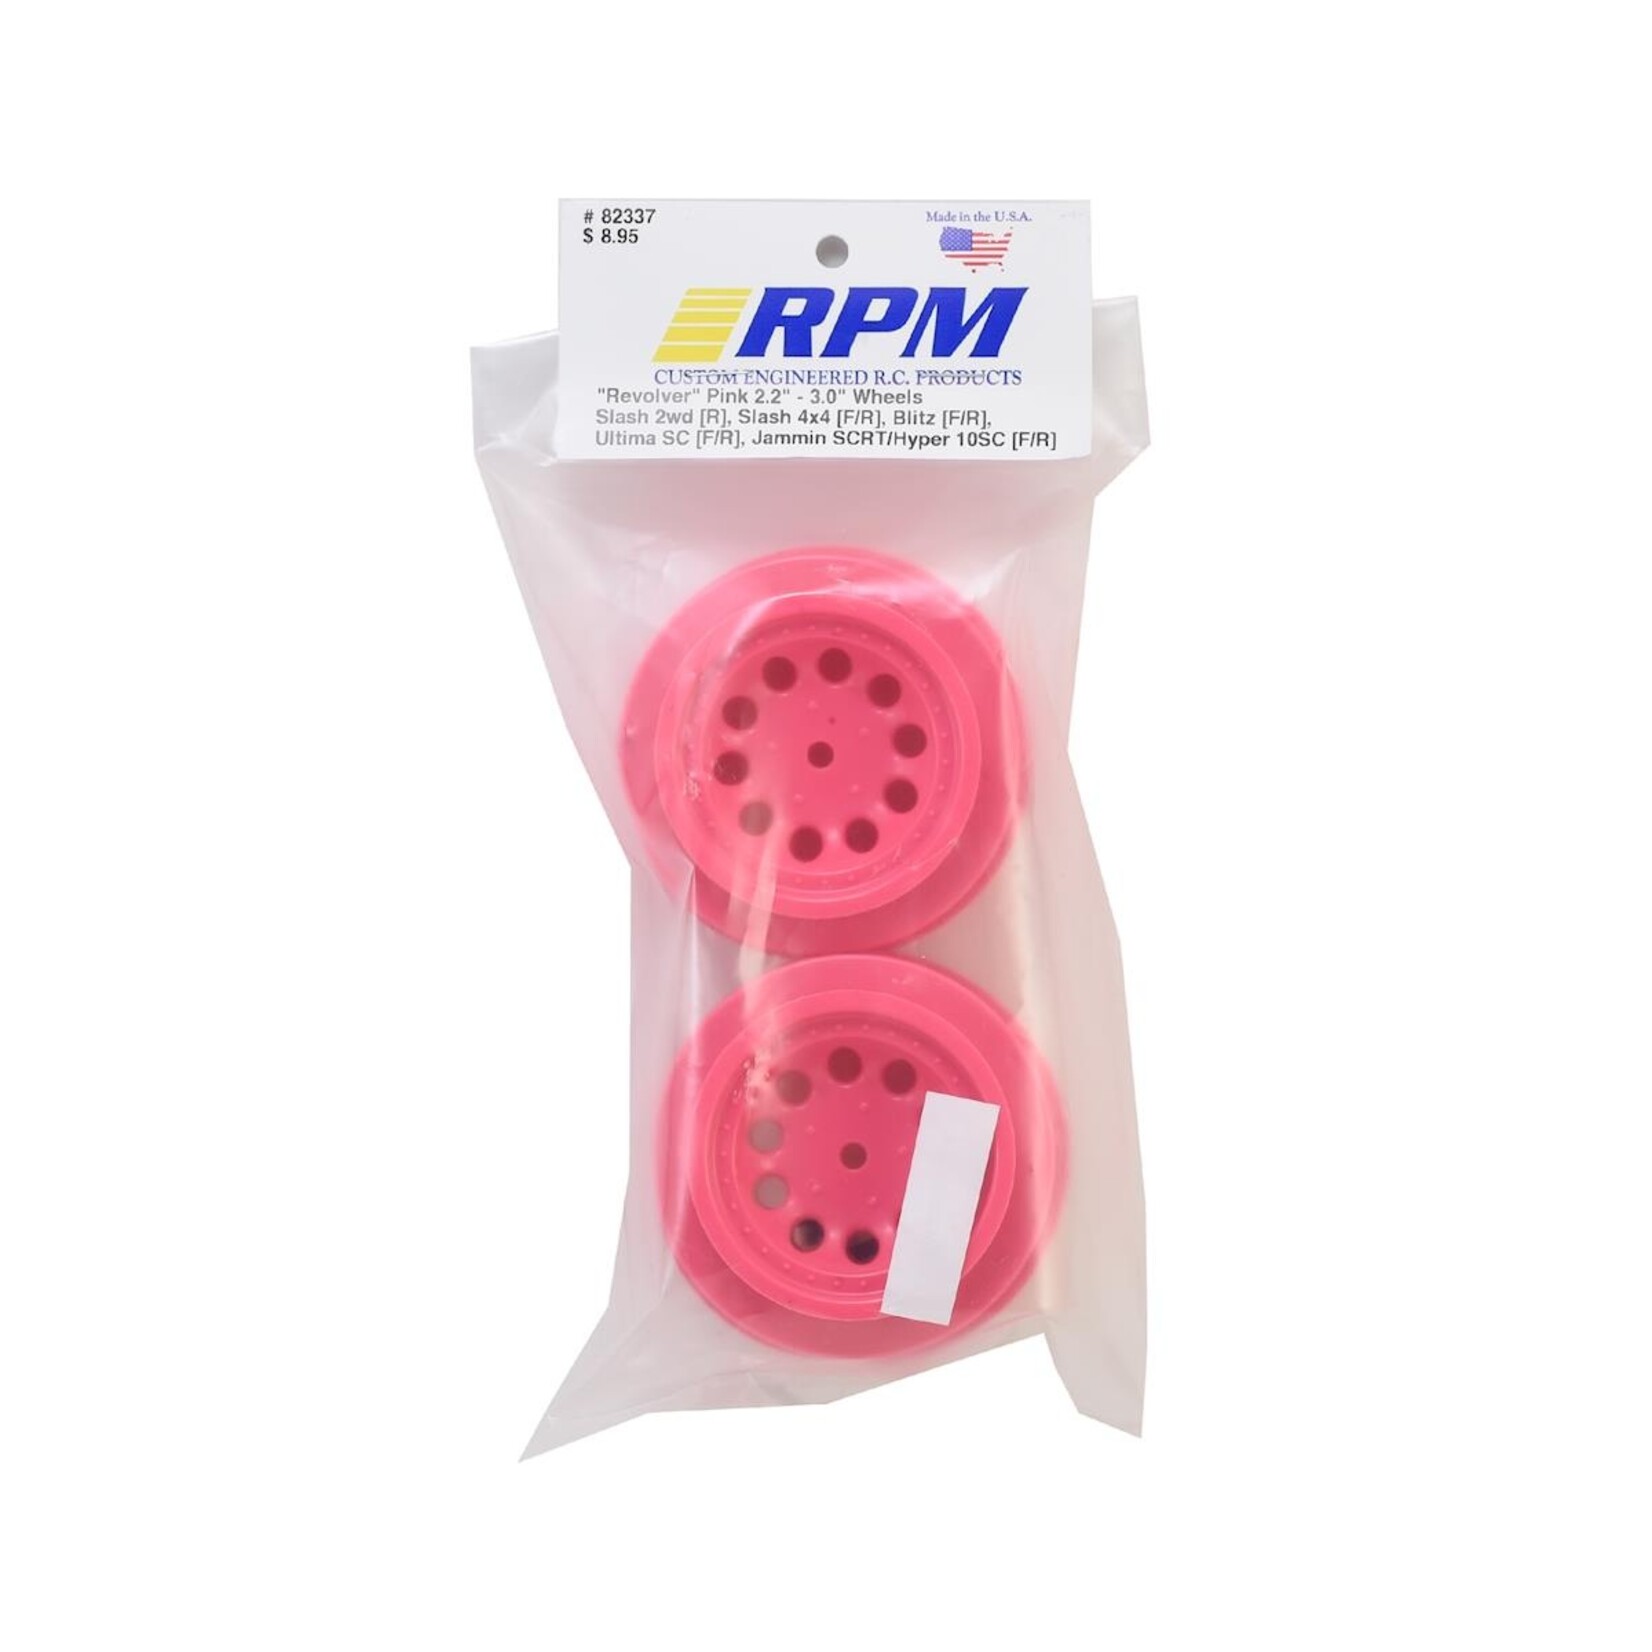 RPM RPM 12mm Spline Drive "Revolver" Short Course Wheels (Pink) (2) (Slash Rear) #82337